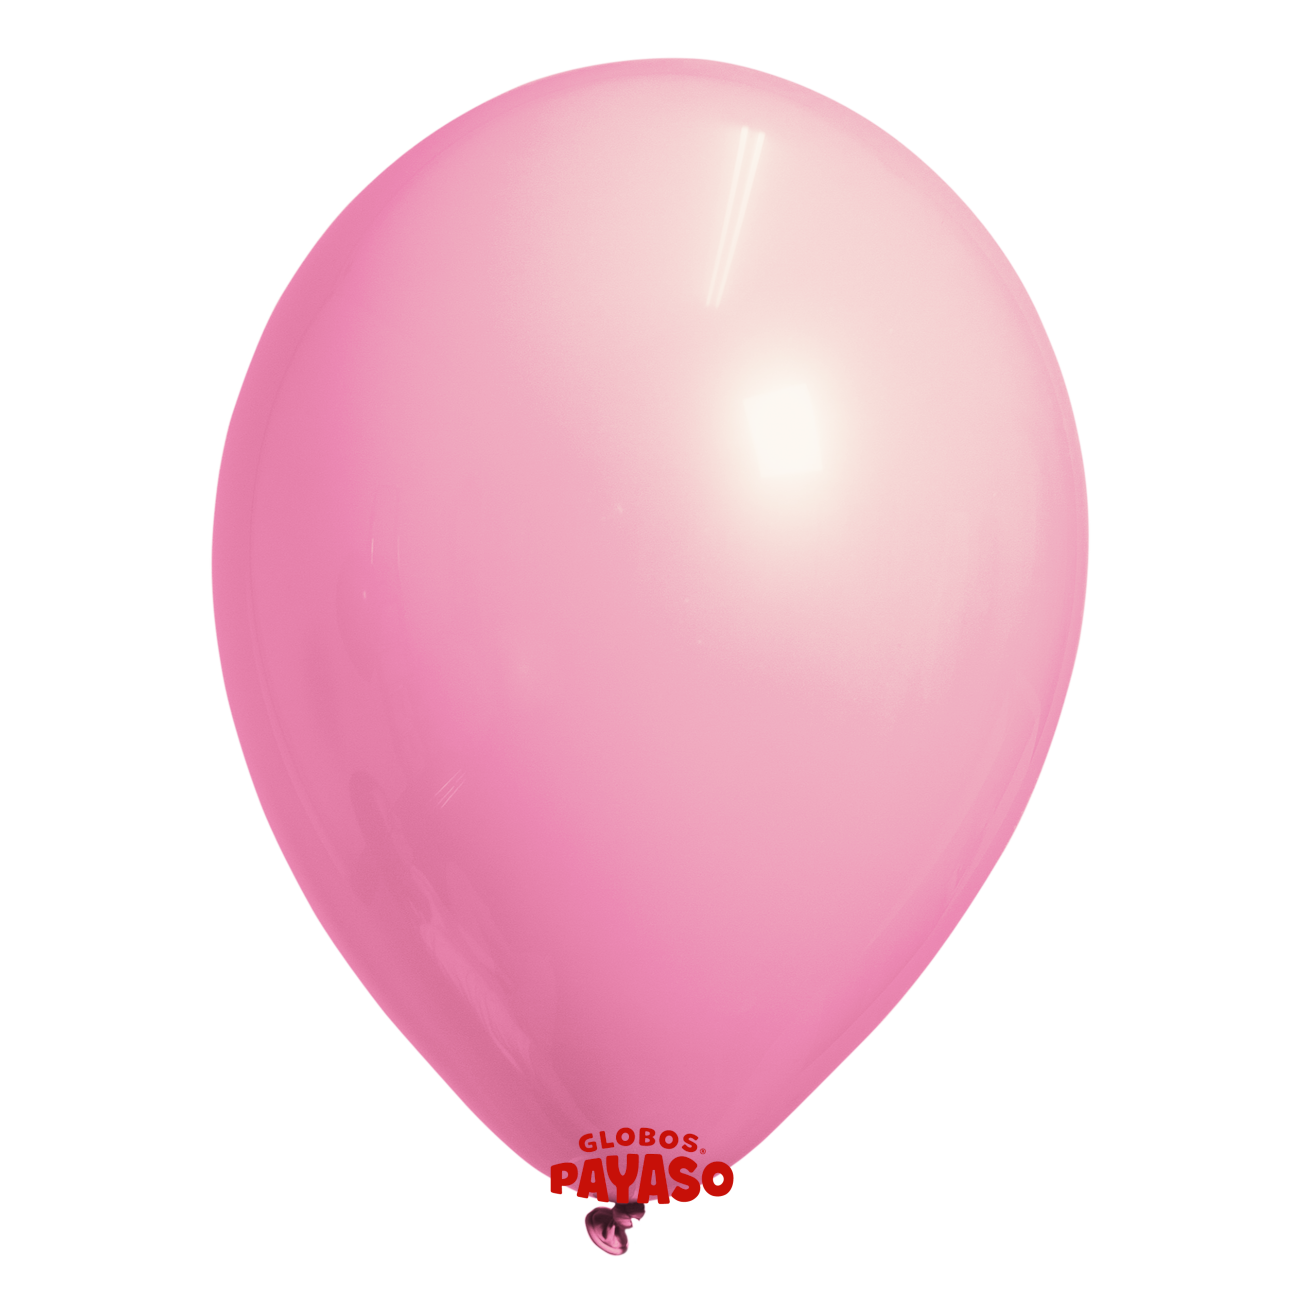 Globos Payaso / Unique 12" Pink Pastel Balloon